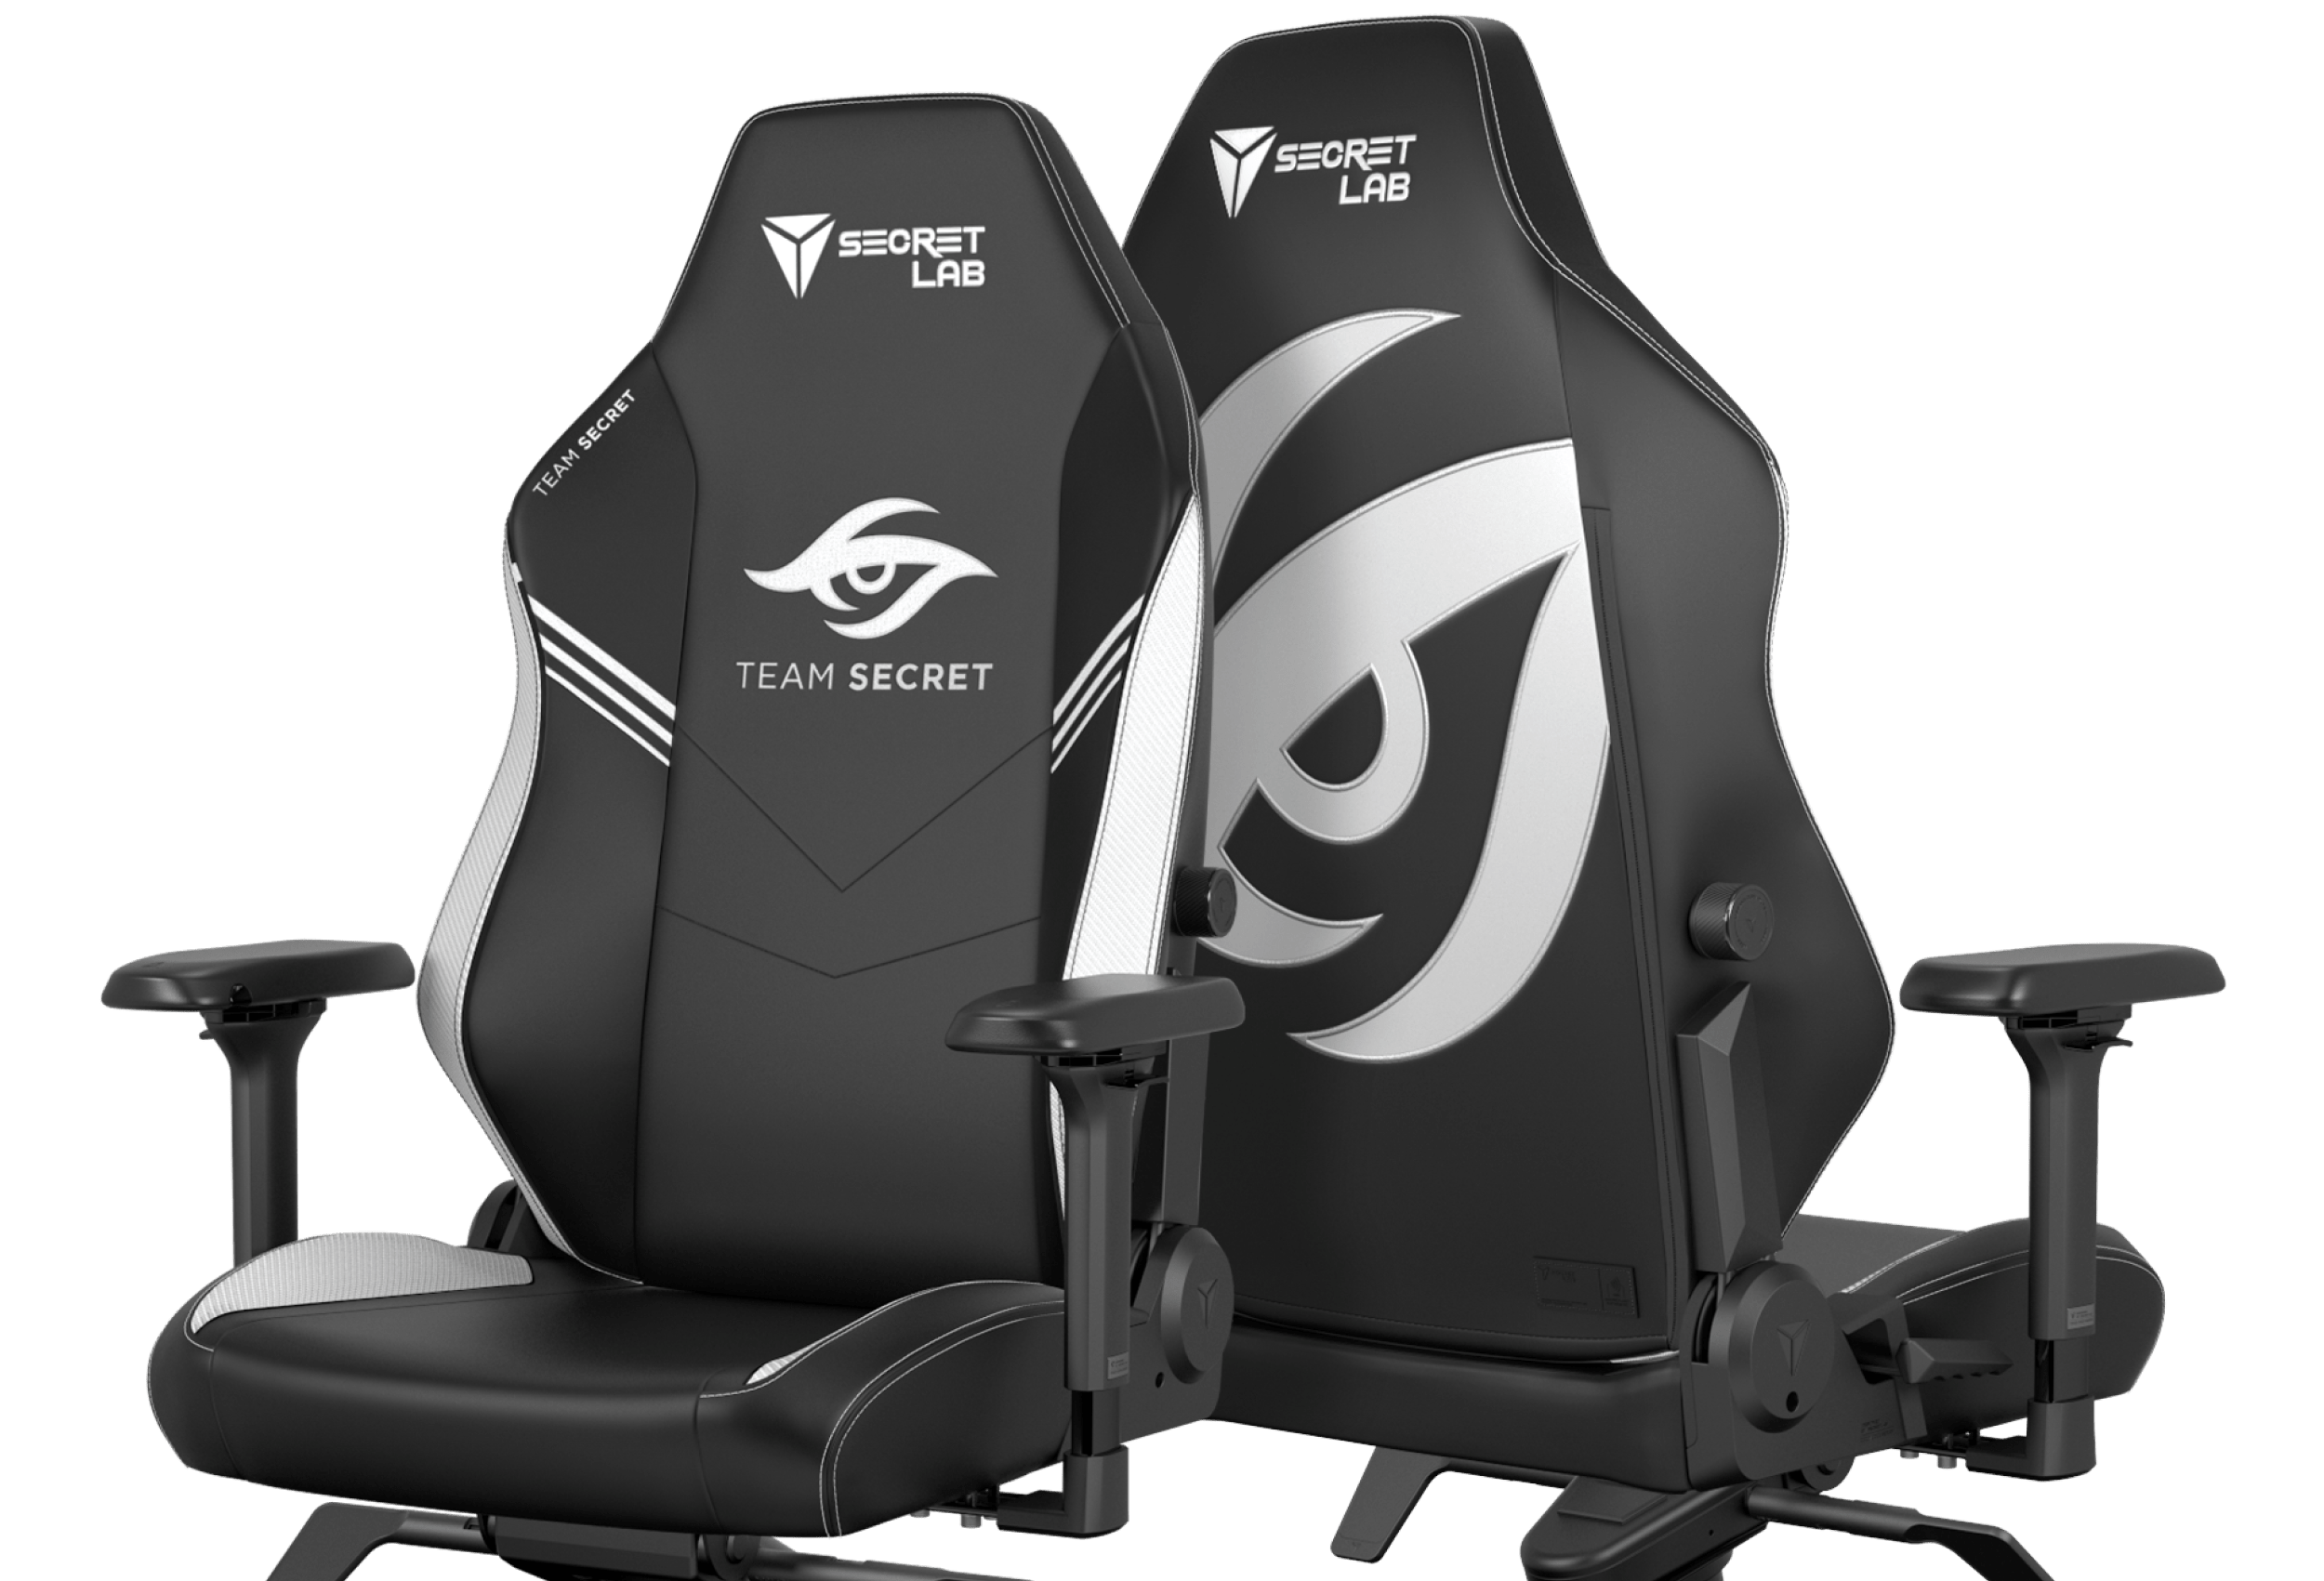 Razer Secret lab gaming chair price malaysia with Sporty Design